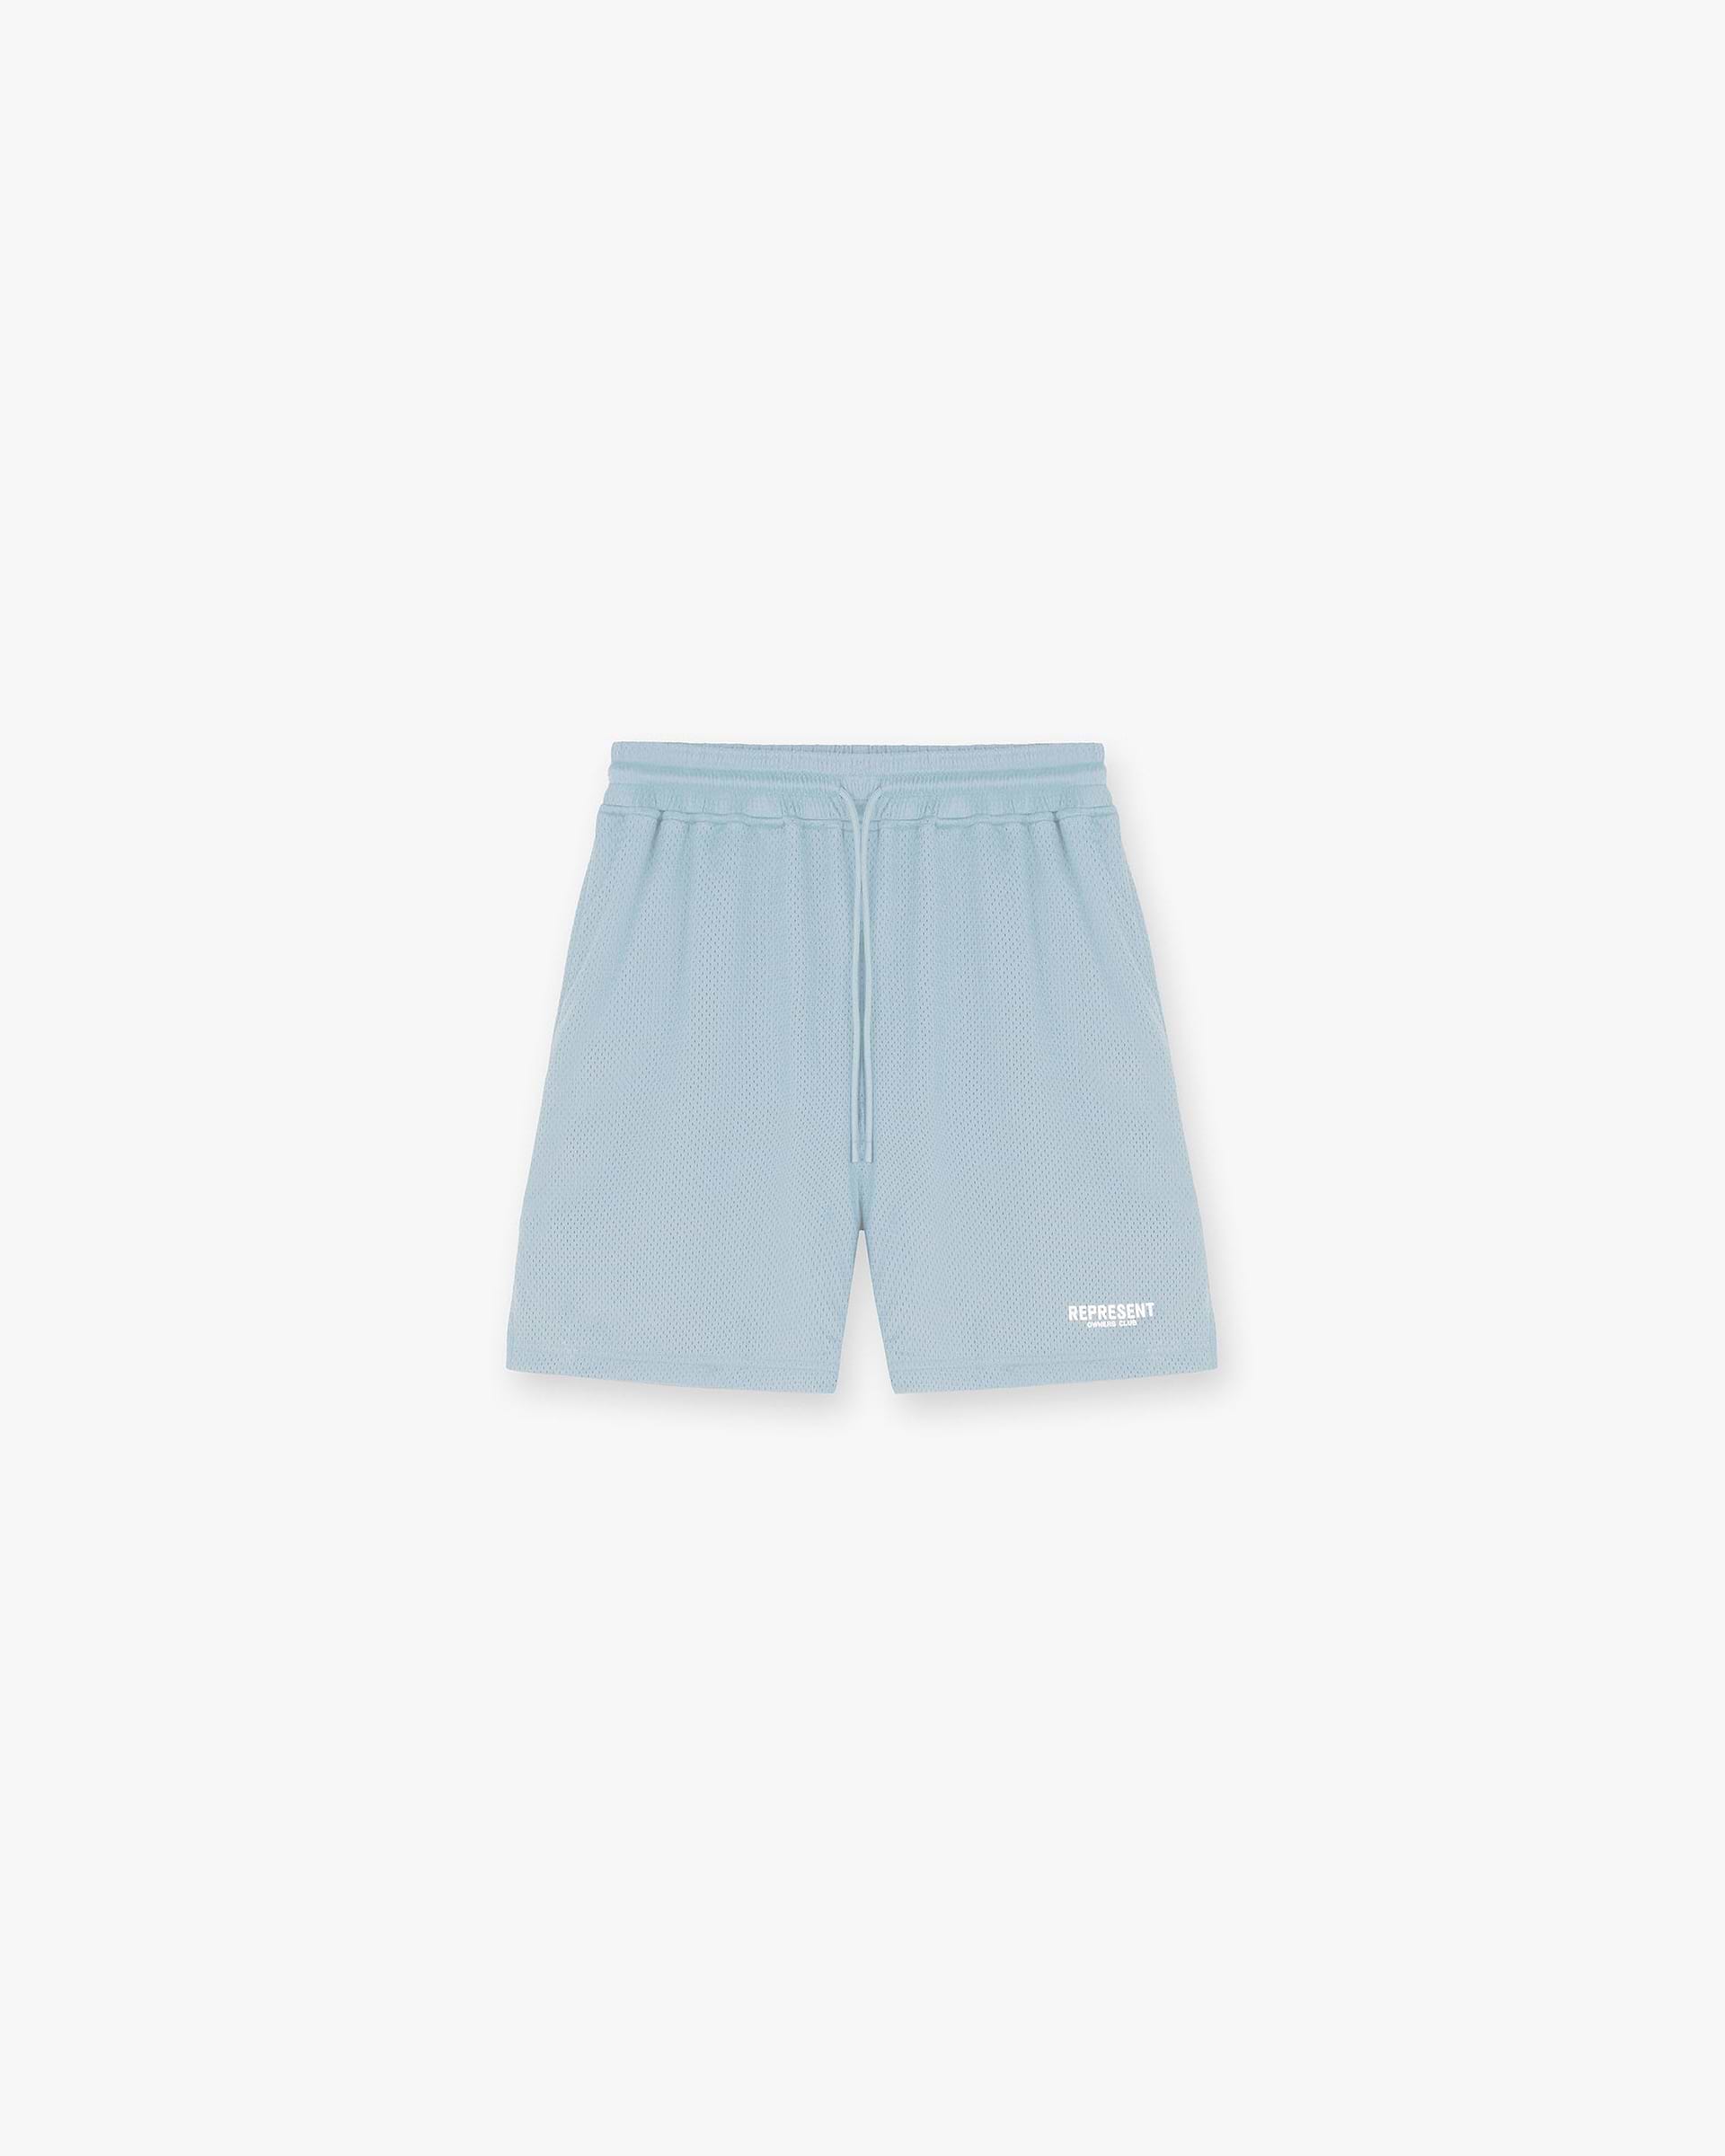 Powder Blue Mesh Shorts | Owners' Club | REPRESENT CLO